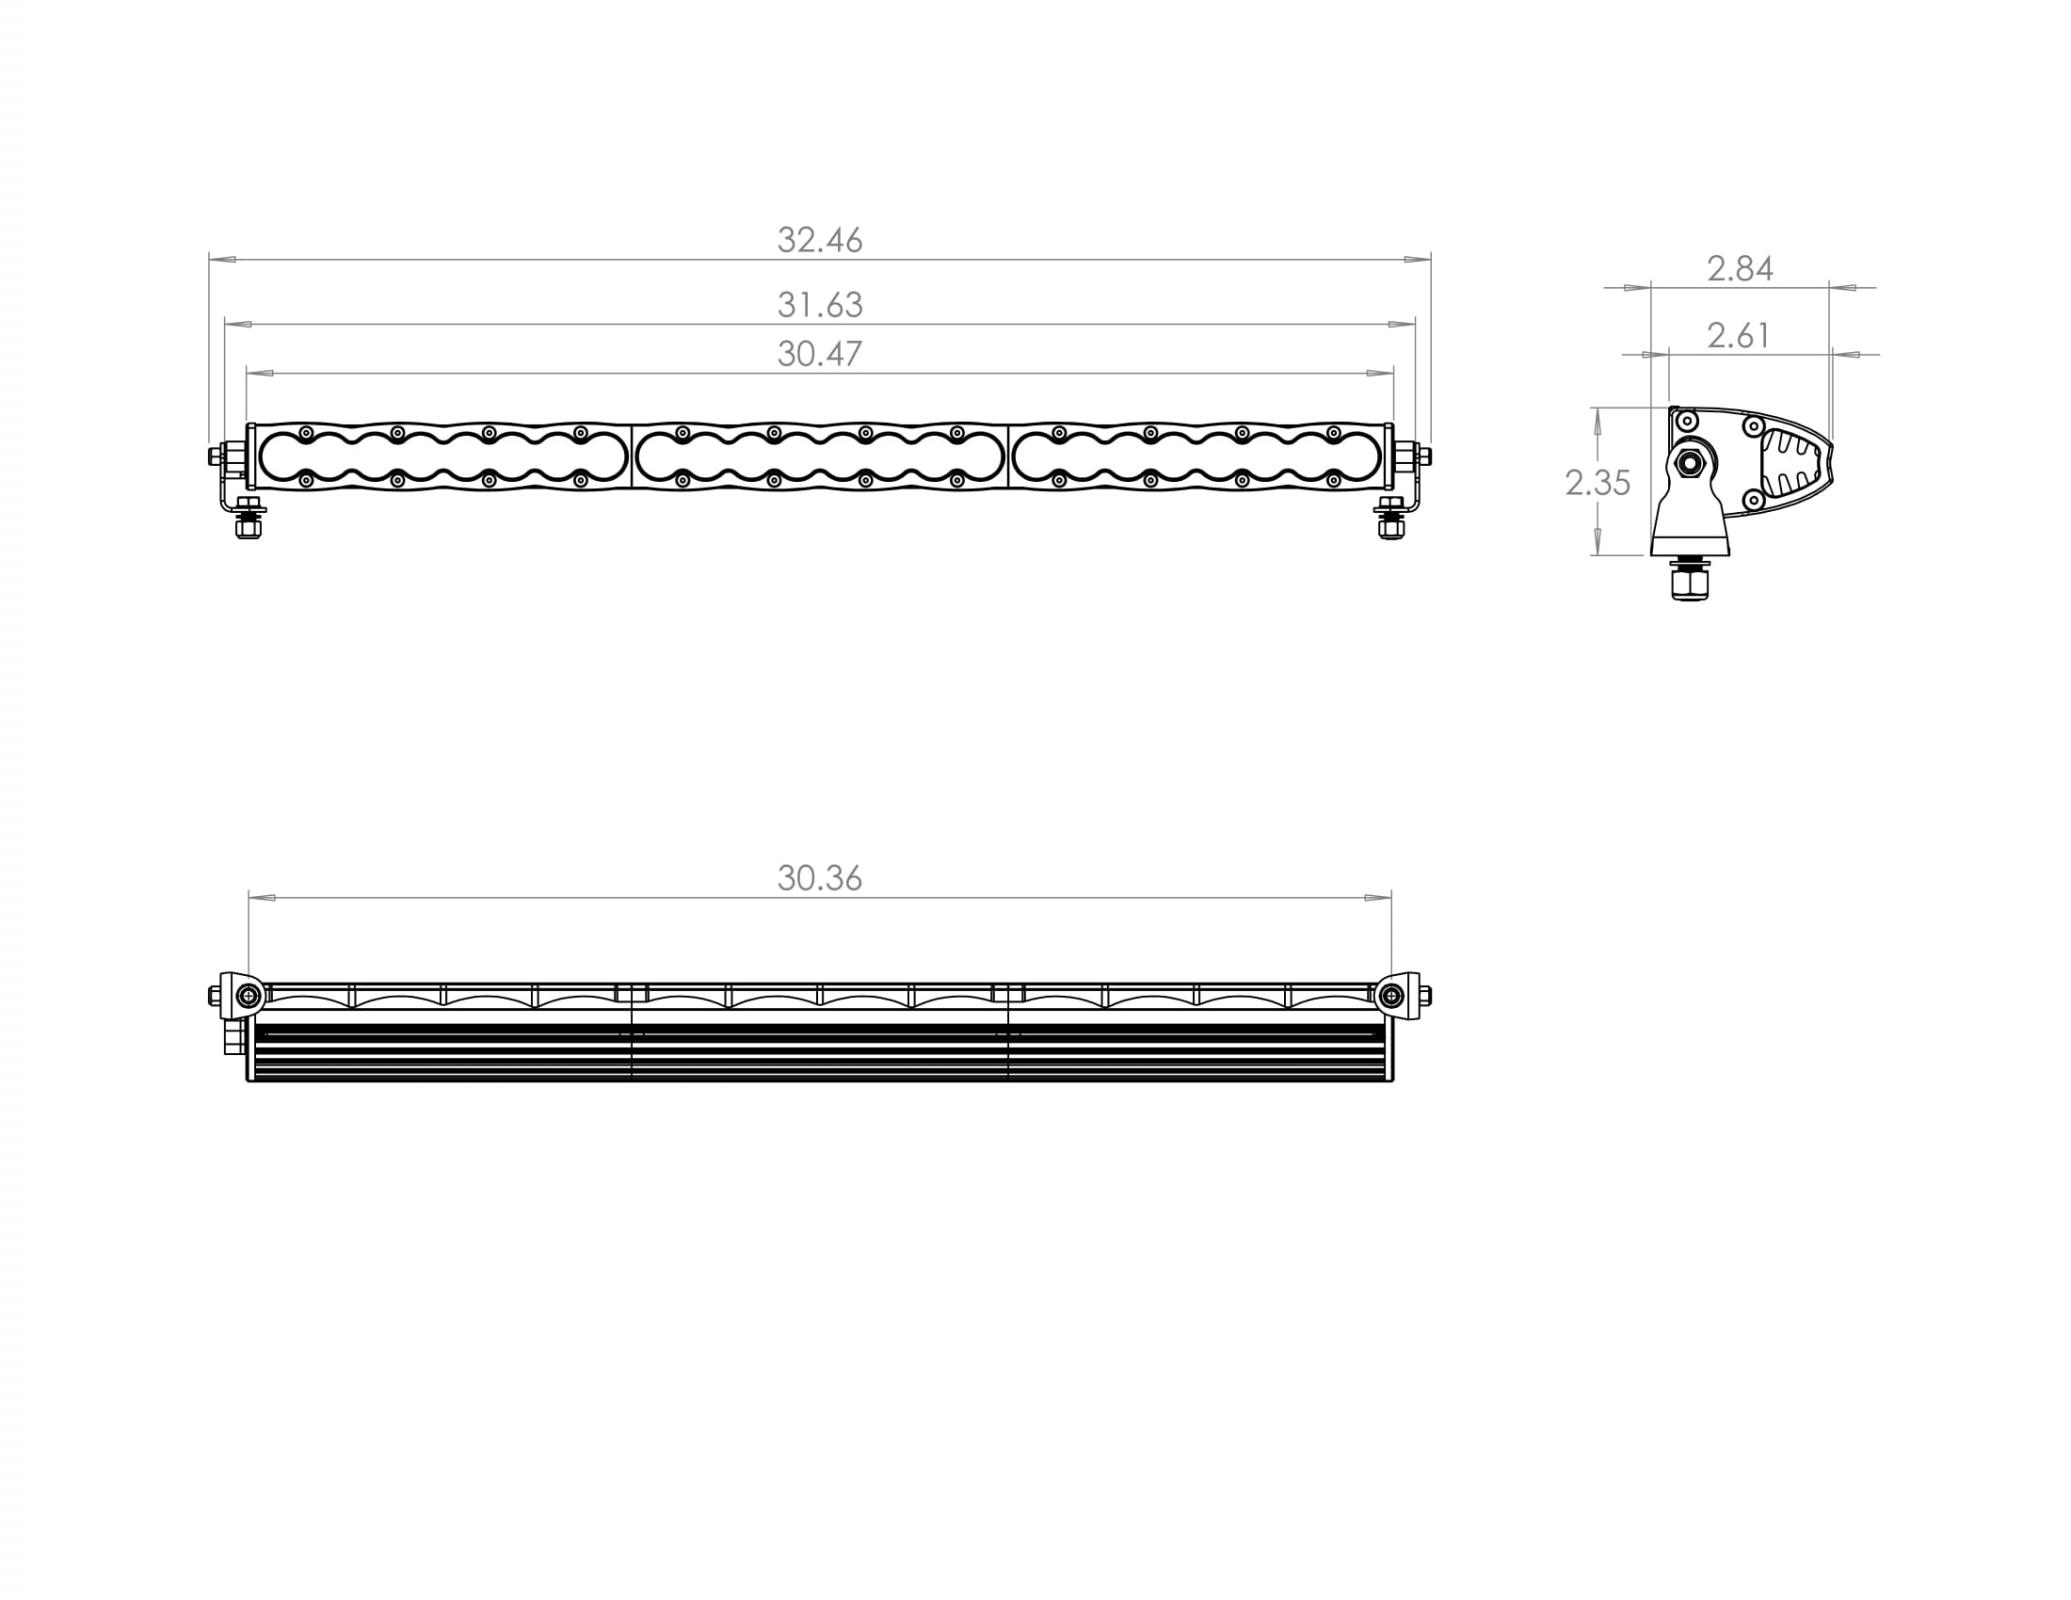 30 Inch LED Light Amber Bar Wide Driving Pattern S8 Series Baja Designs